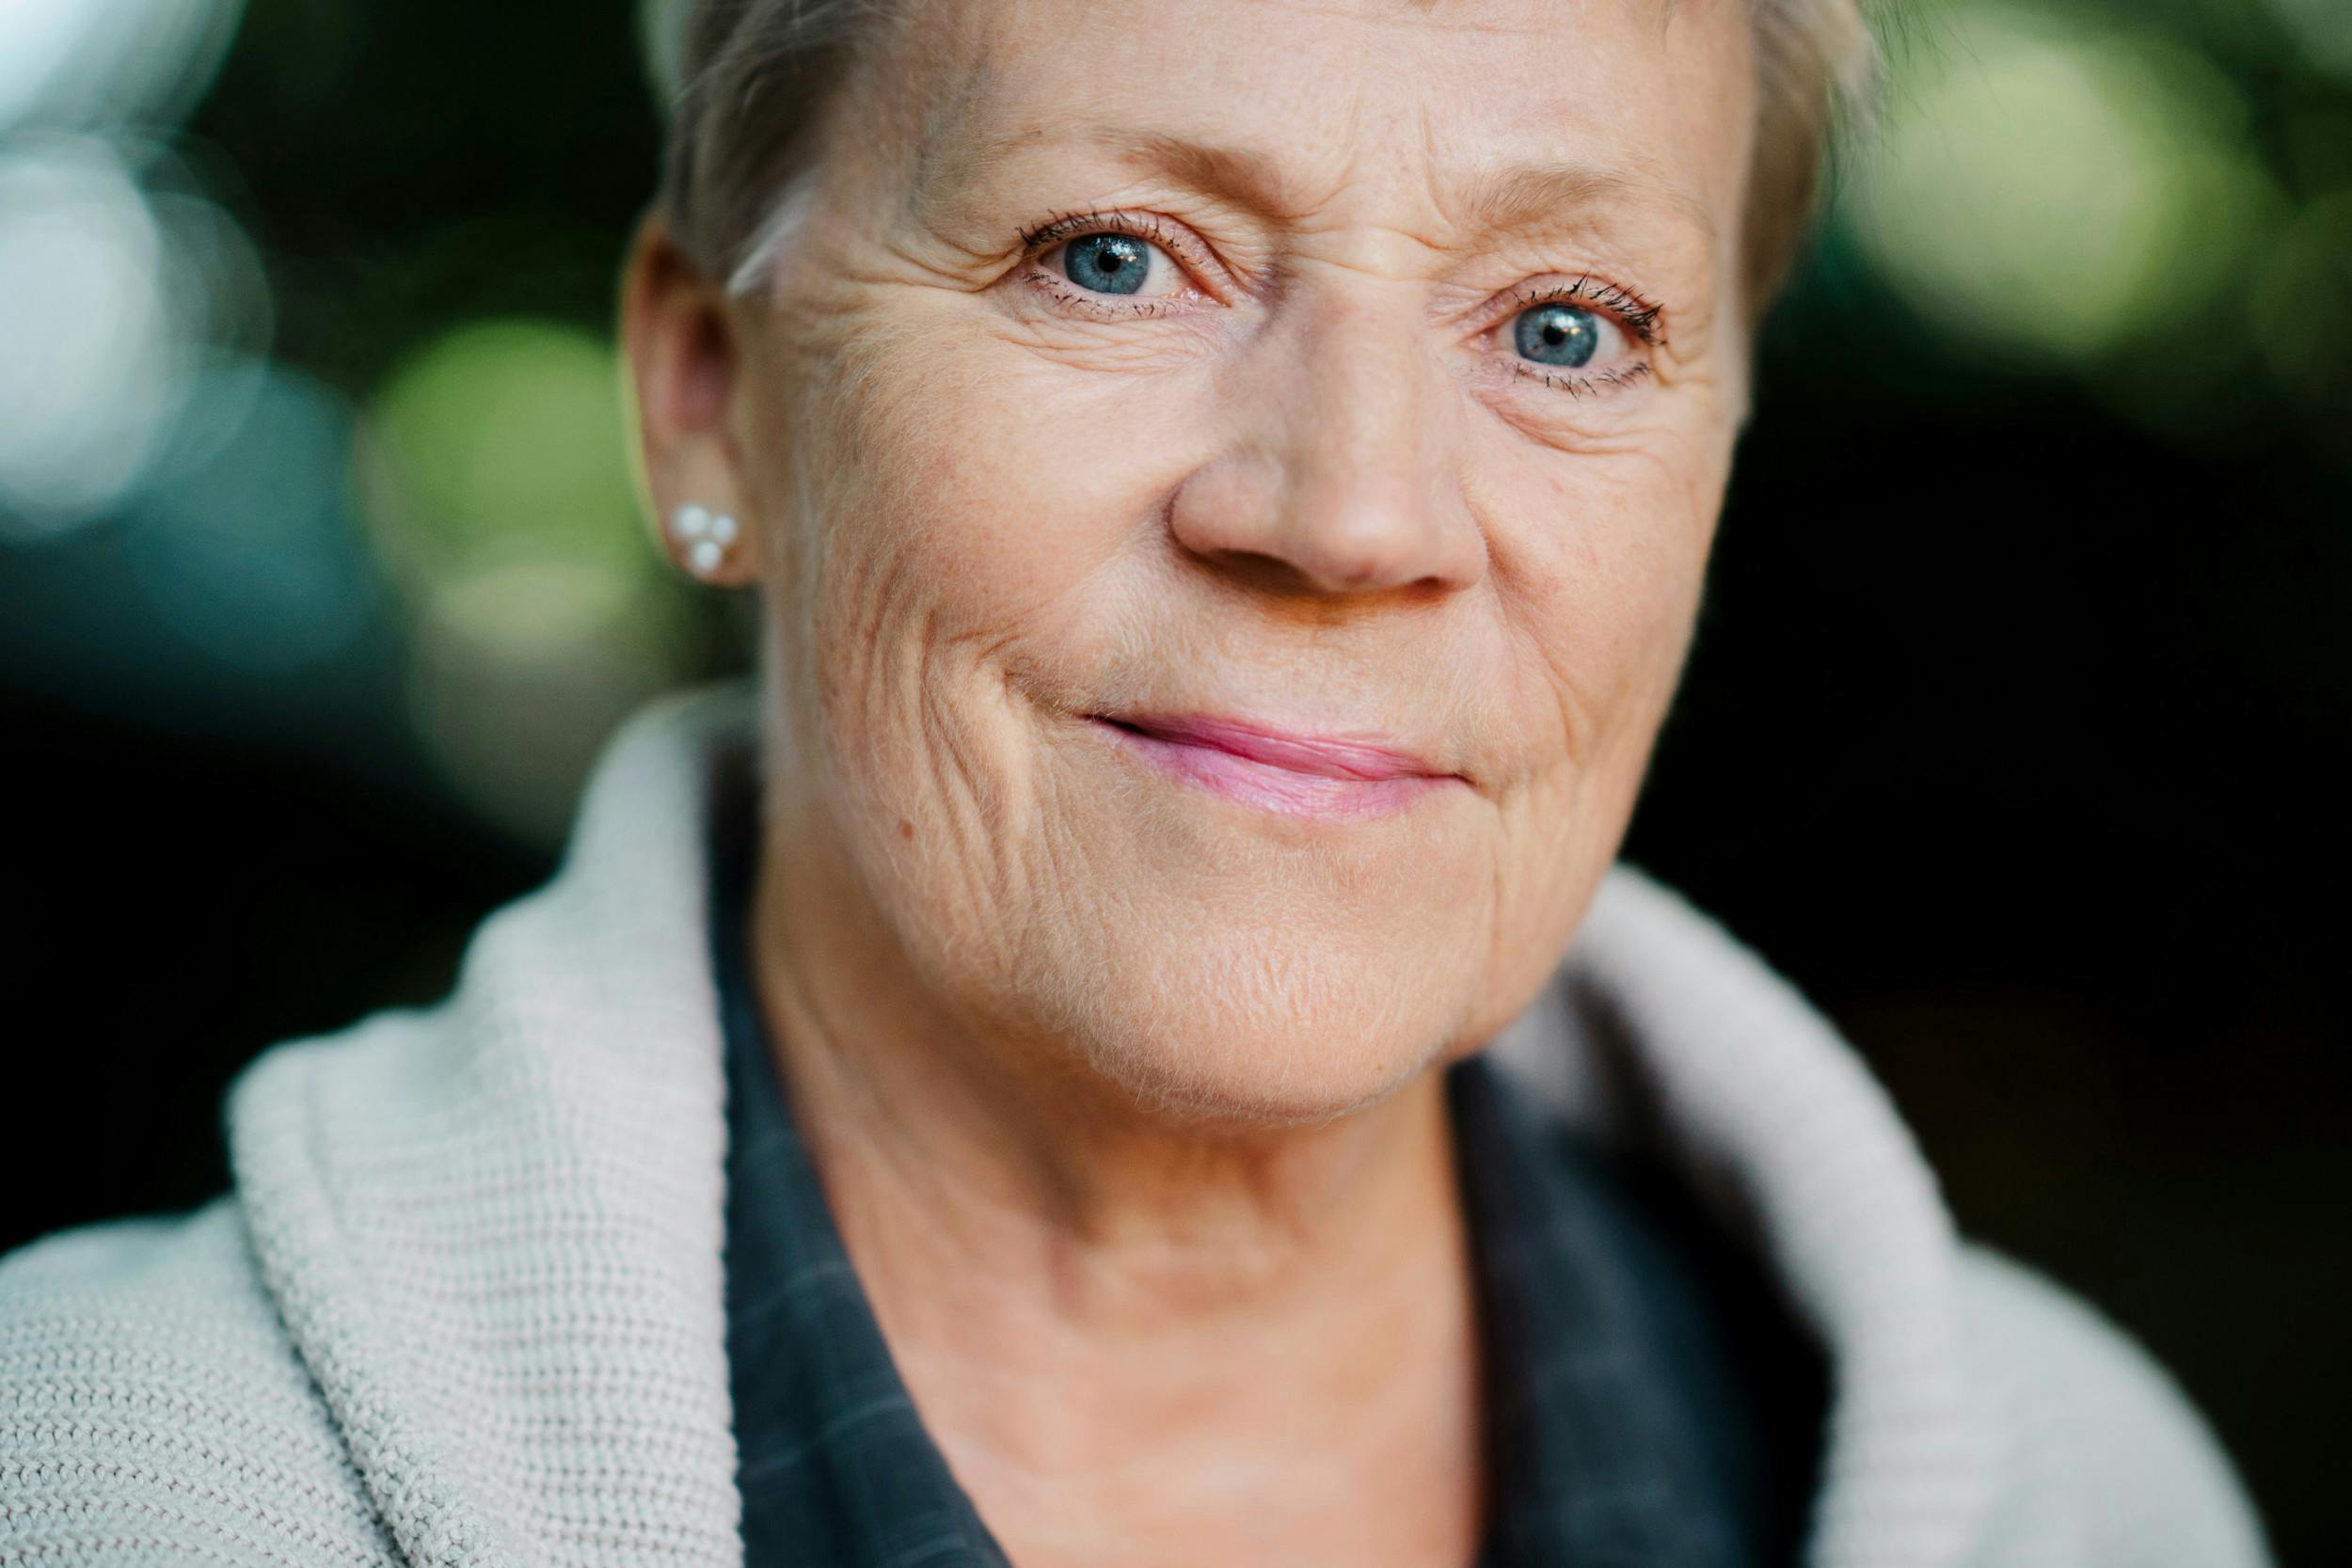 Dorthe har skrevet bogen ”Demenssprog – lær at forstå mennesker med demens” sammen med demenspsykologen Anneke Dapper-Skaaning.